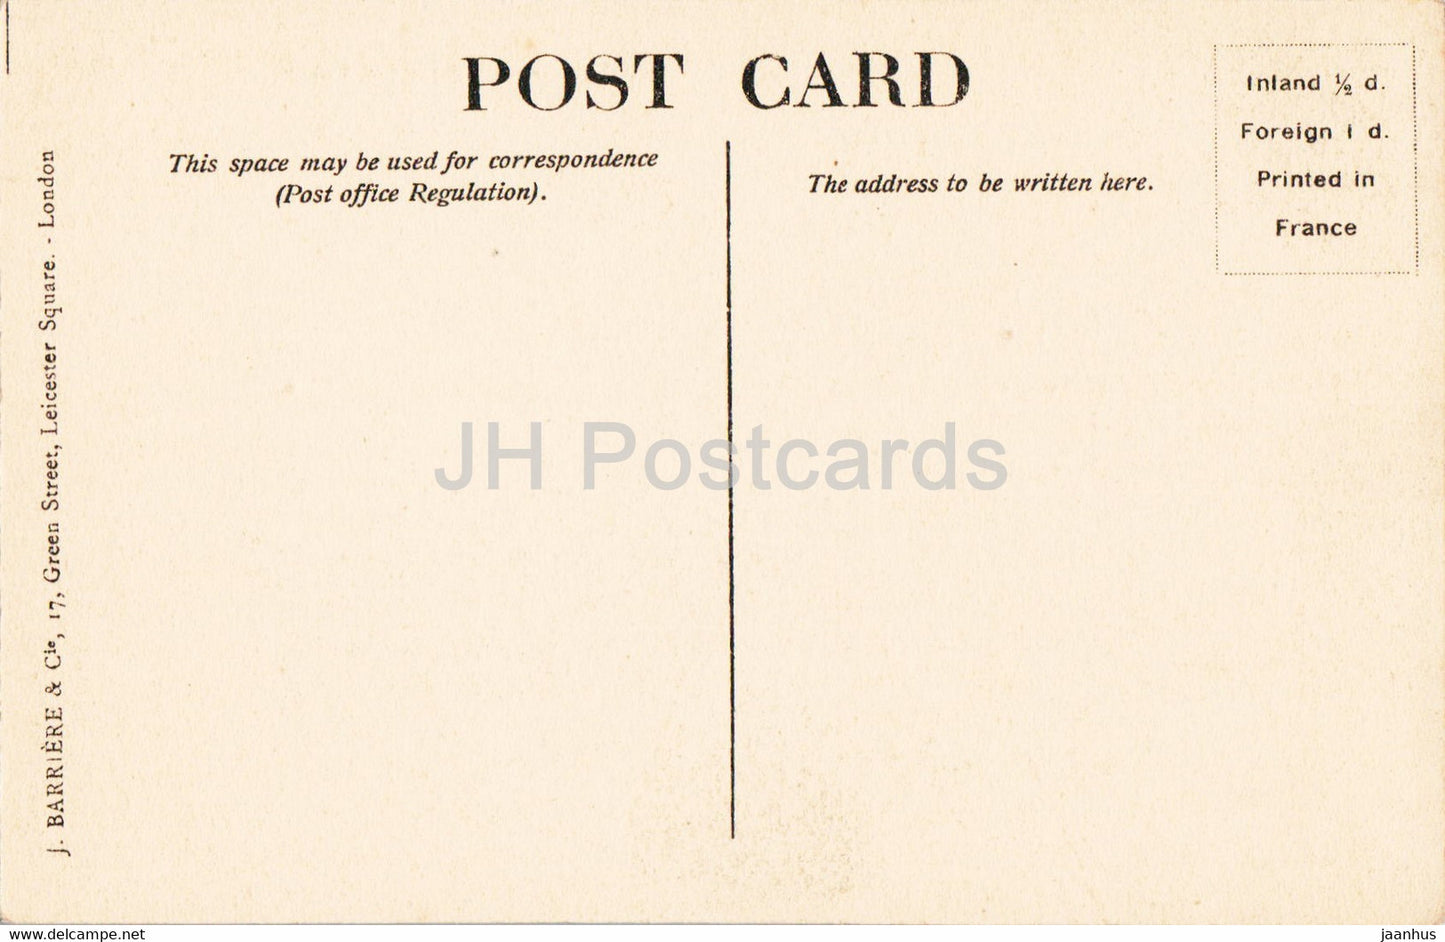 London - The Houses of Parliament - boat - old postcard - England - United Kingdom - unused